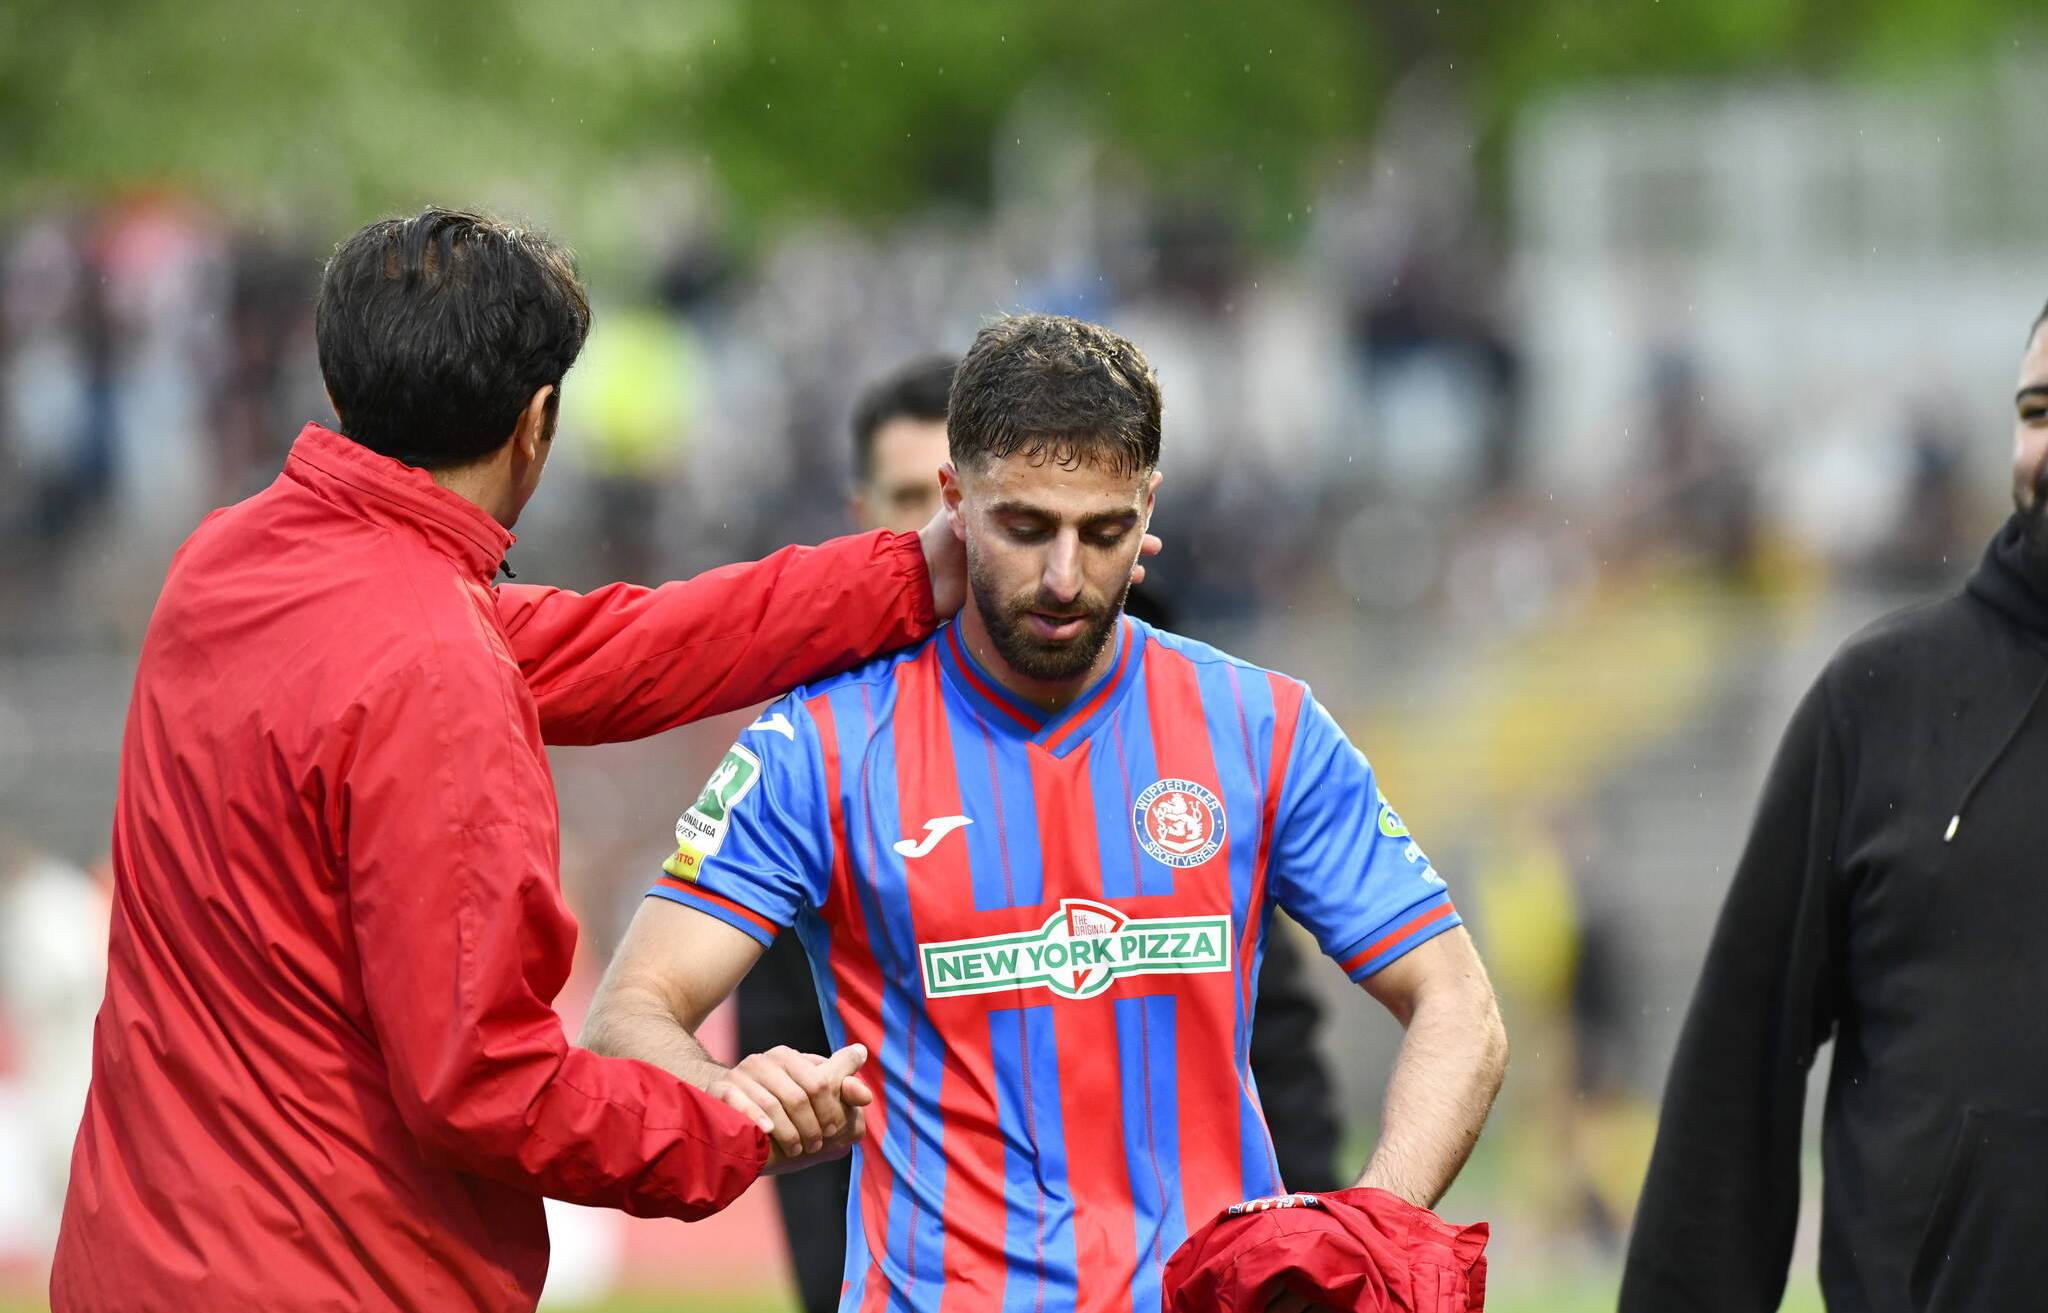 Serhat-Semih Güler wurde Torschützenkönig der Regionalliga